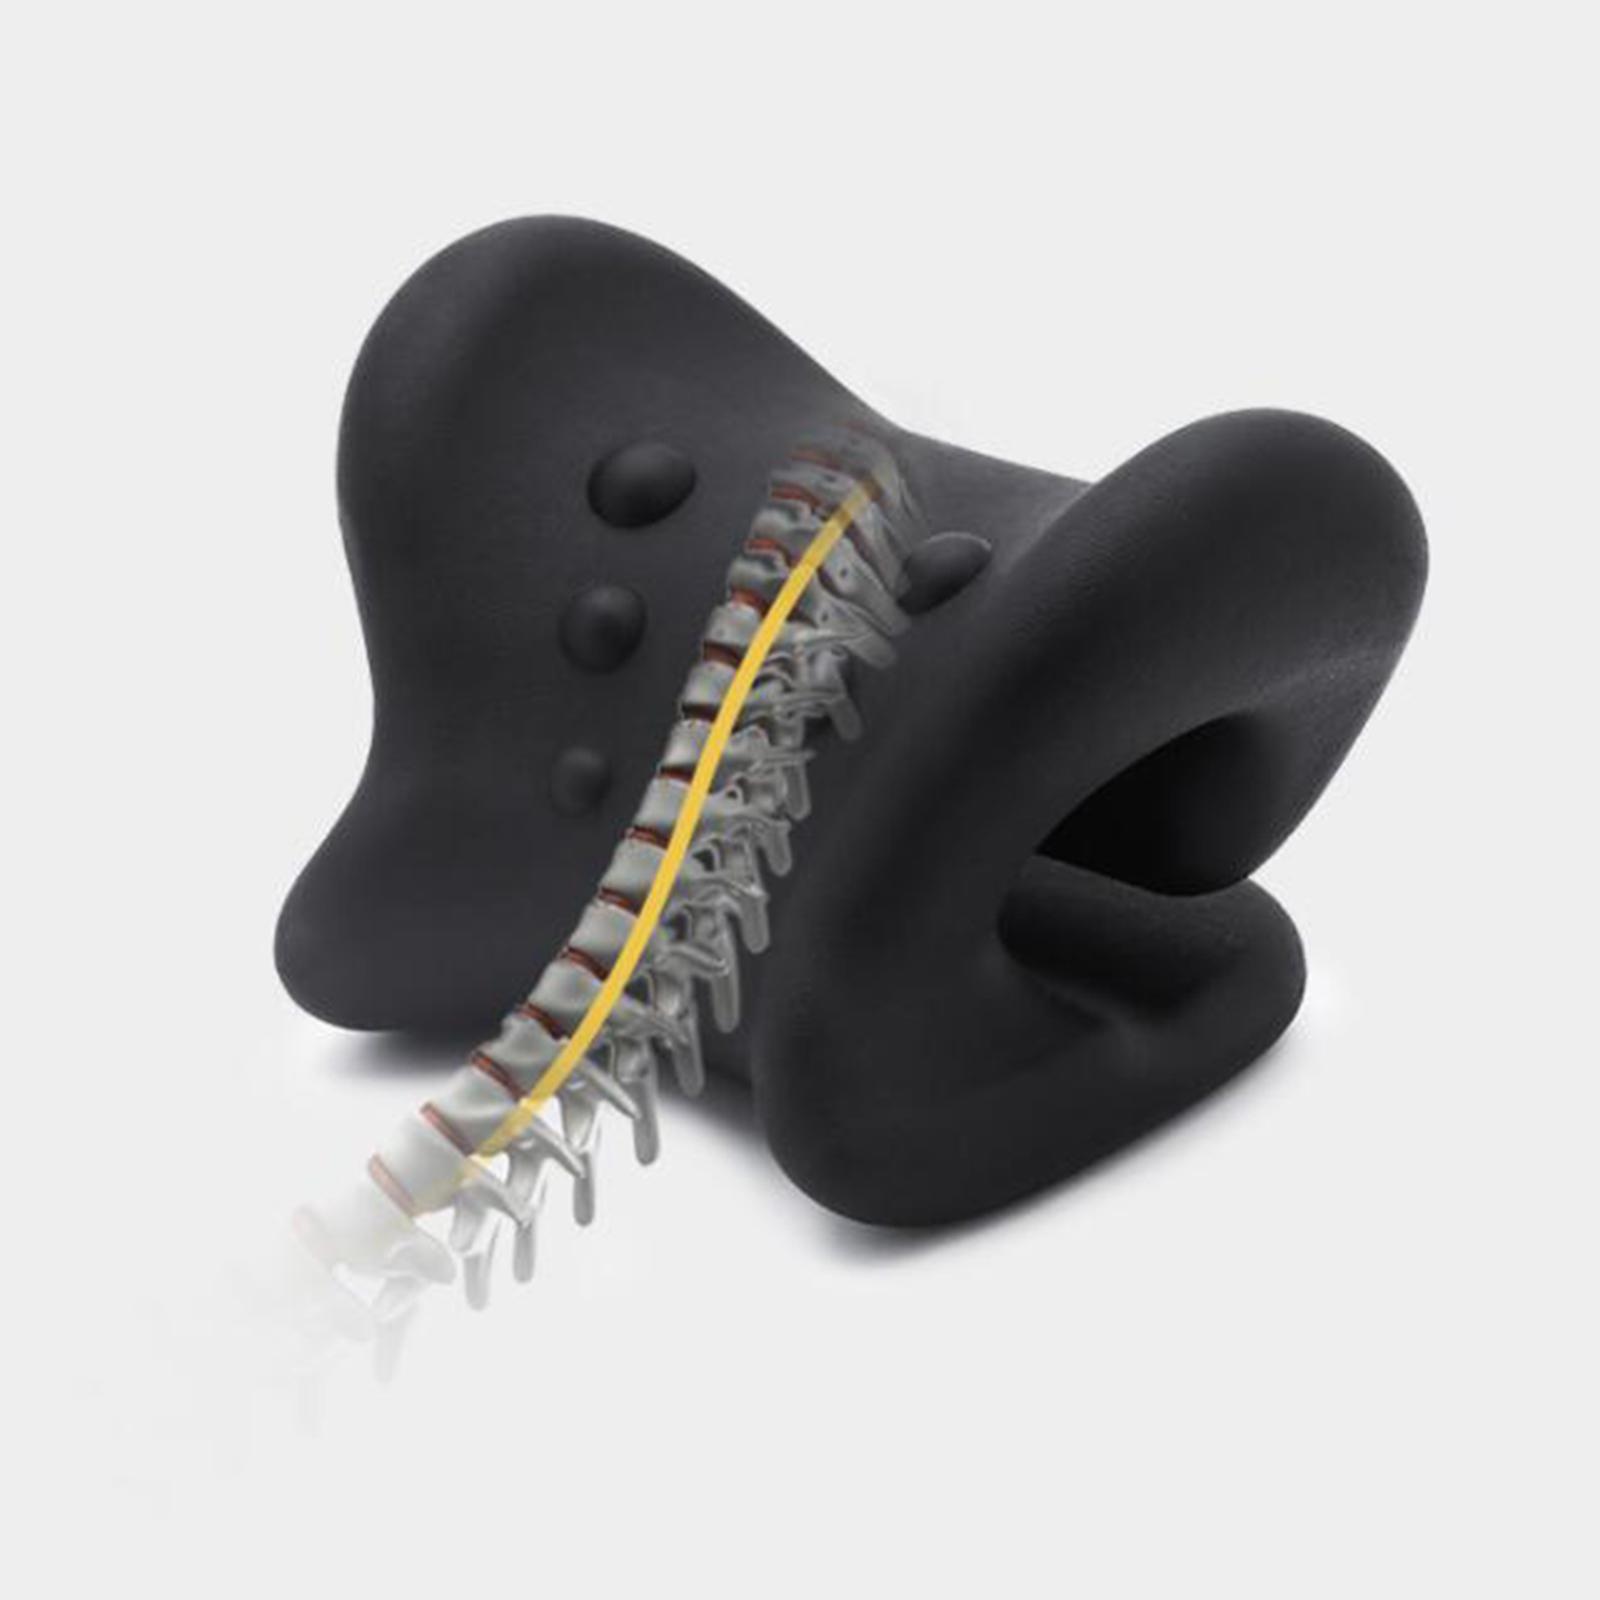 Neck Shoulder Relaxer Cervical Device for Pillow Stretcher 6 Point Black